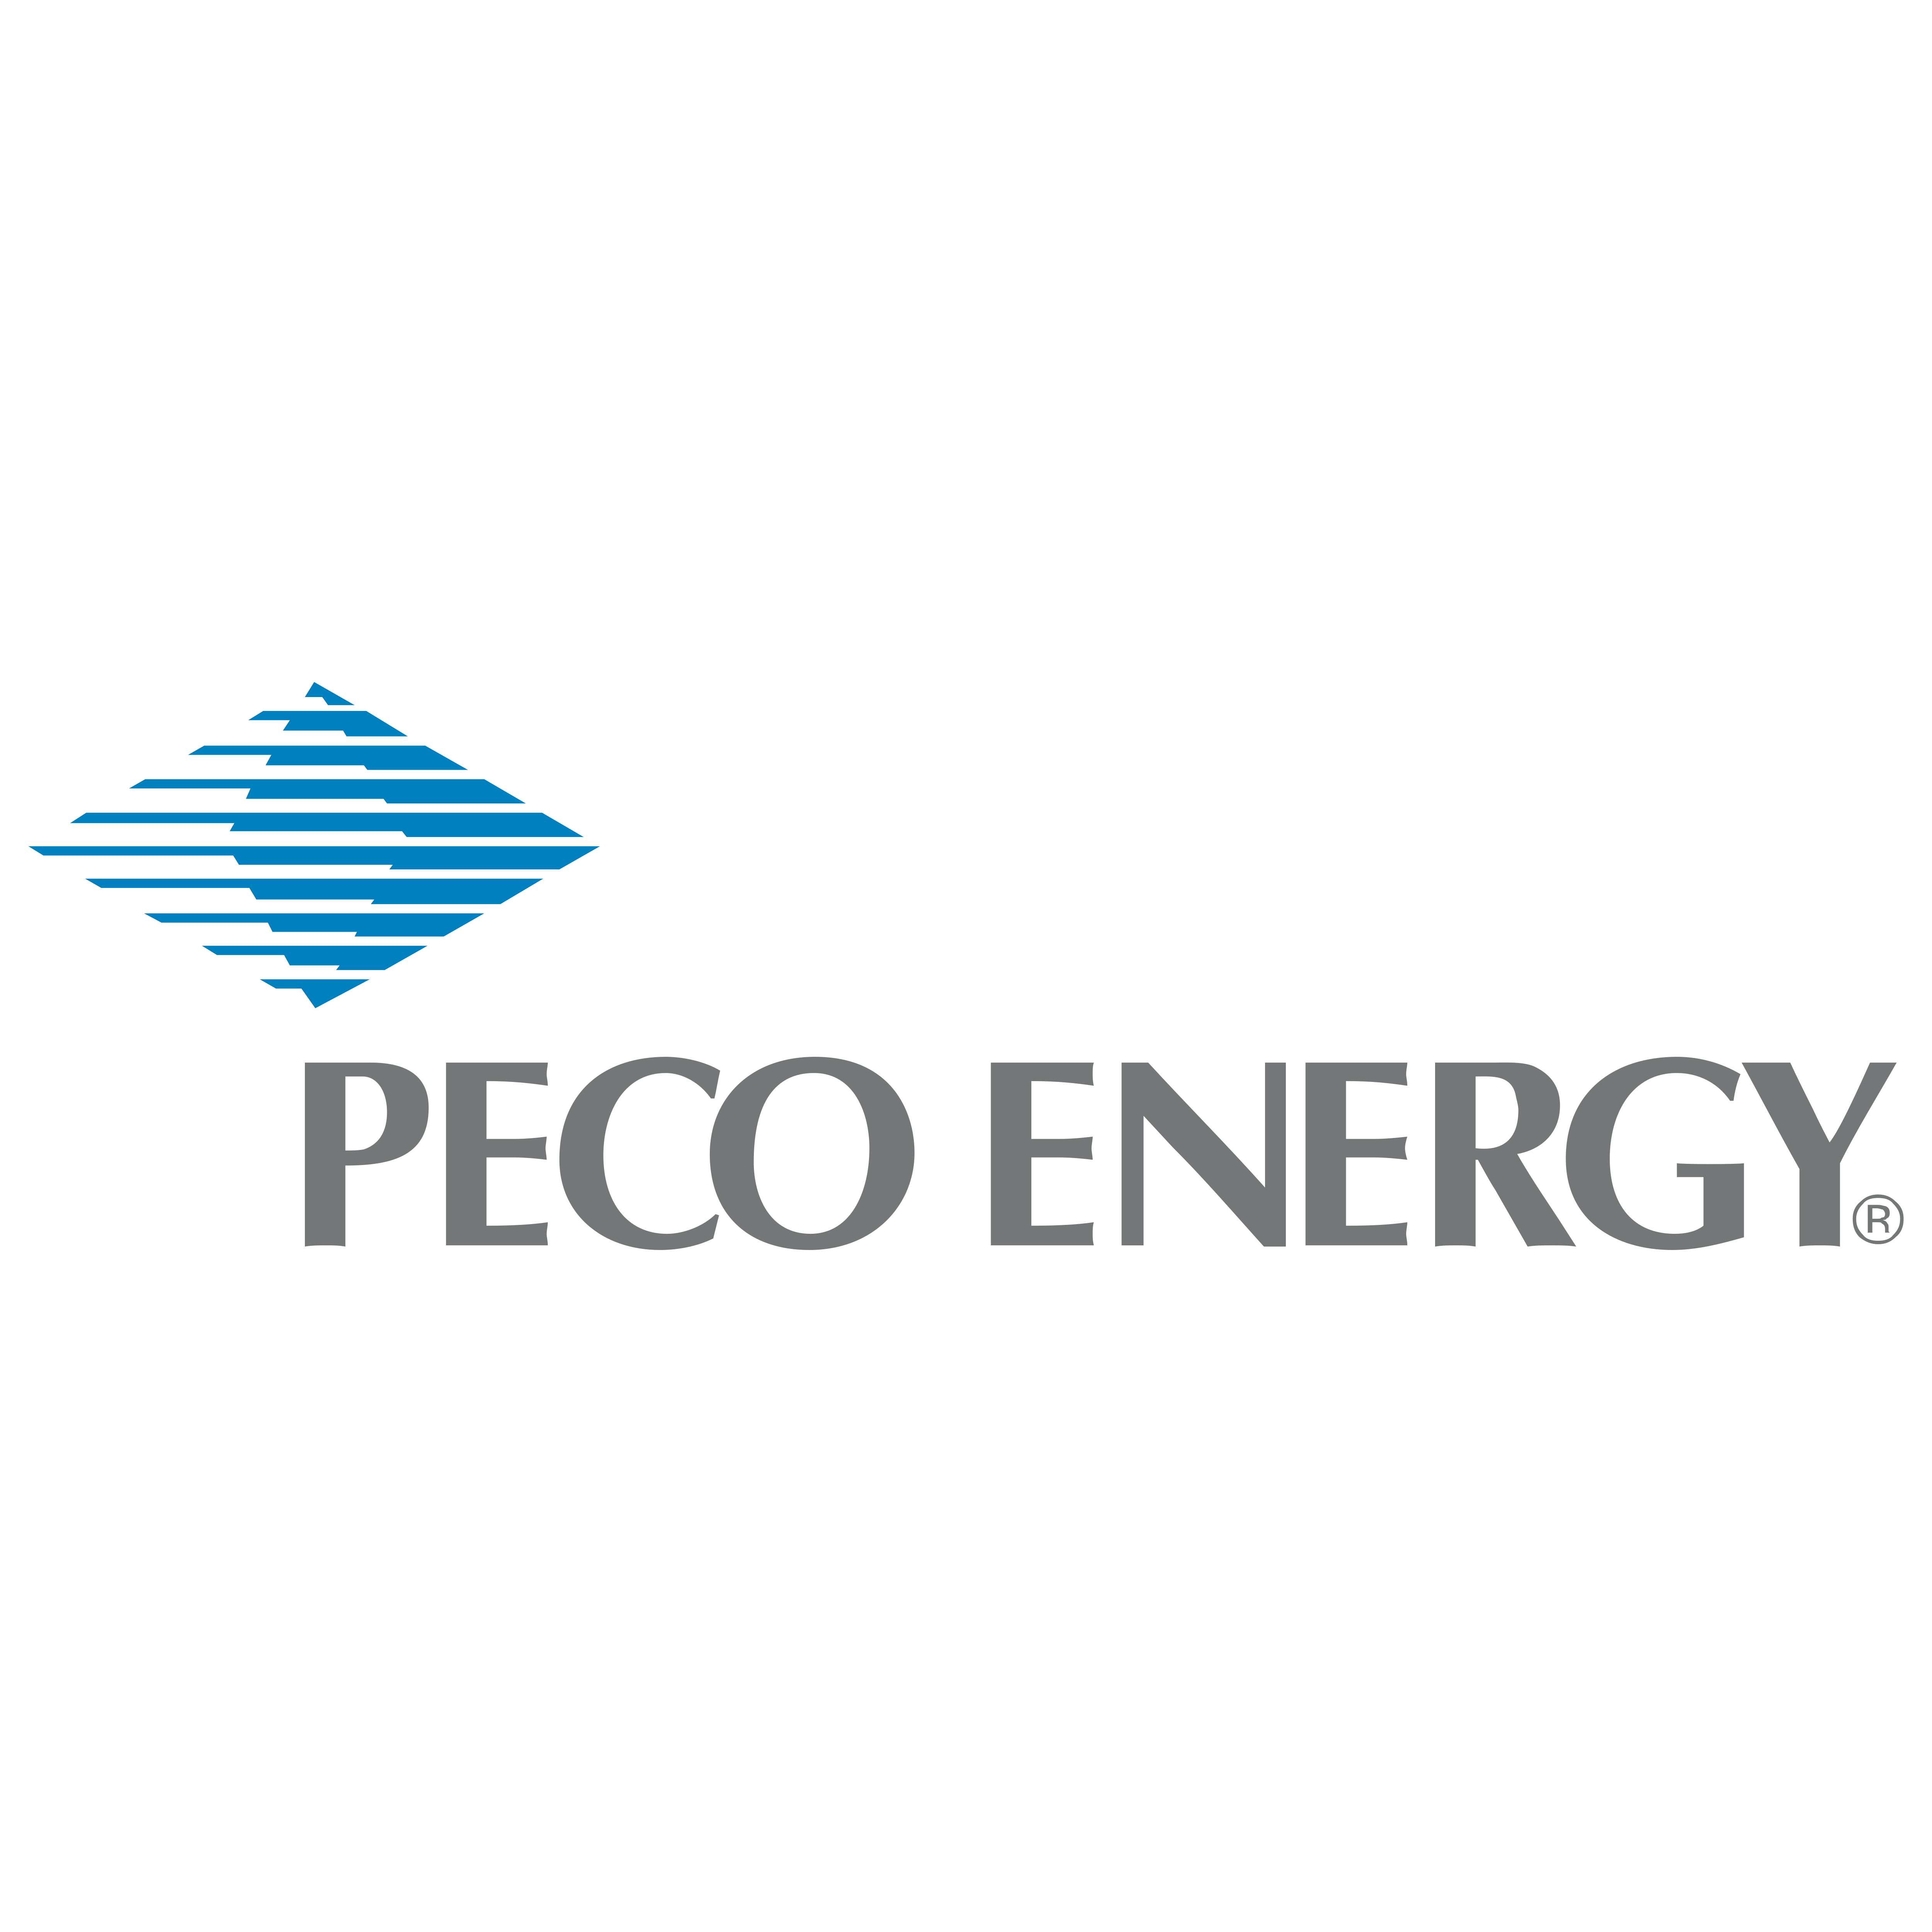 Peco Logo - Peco Energy – Logos Download